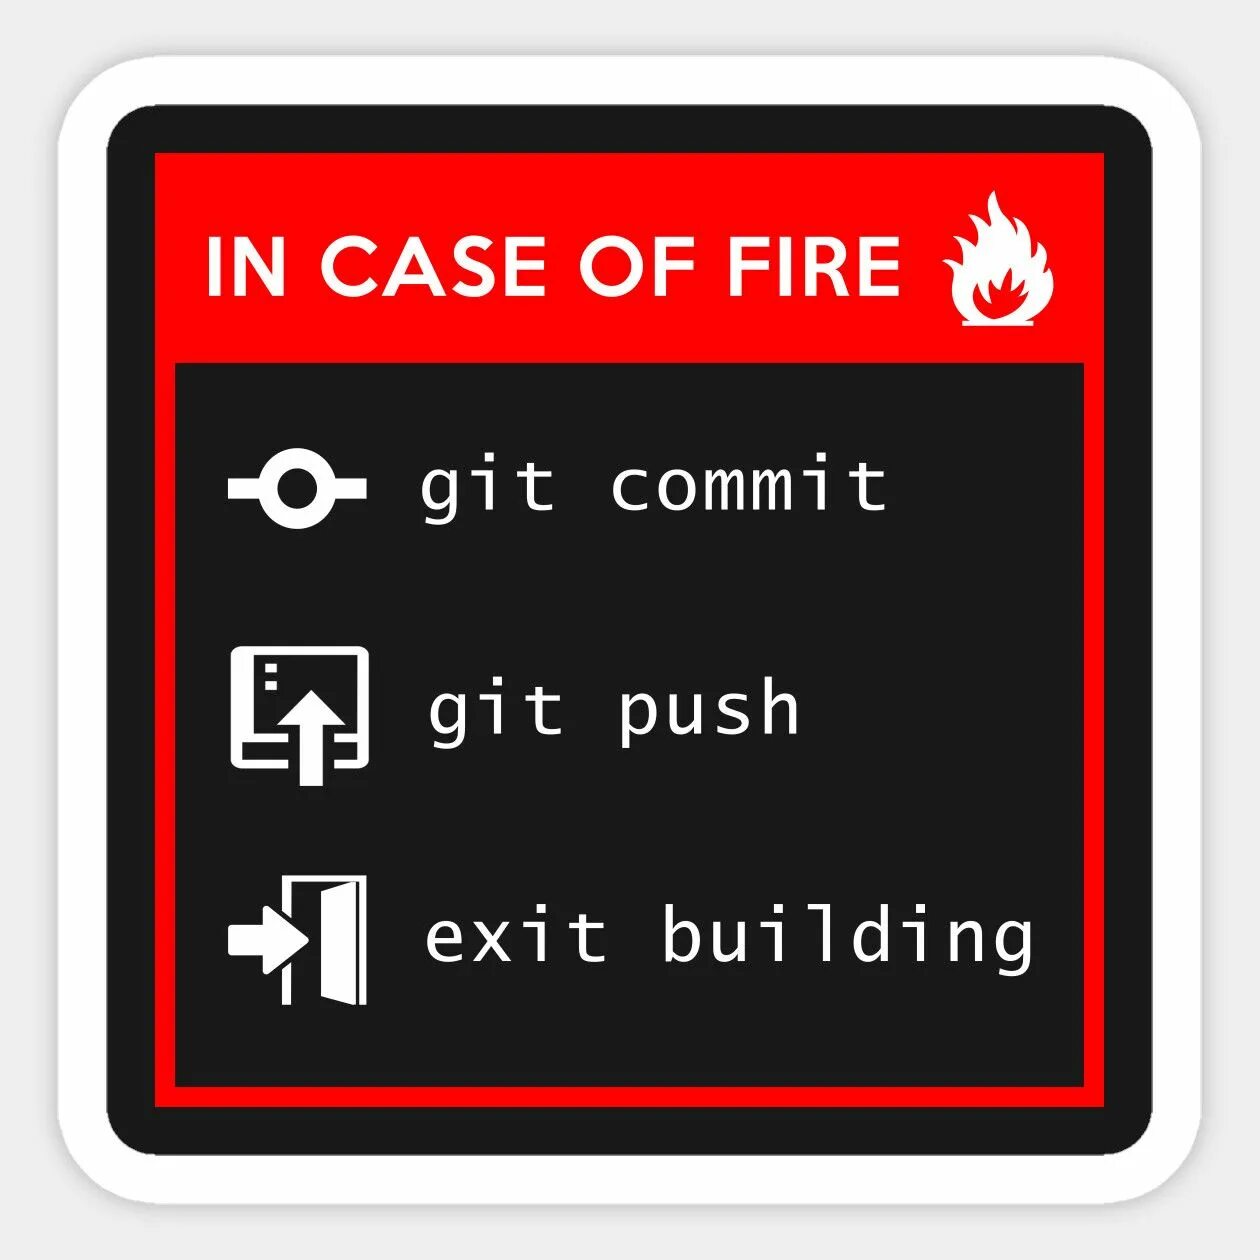 Git Push при пожаре. Git commit. Git commit and Push. Git commit git Push.